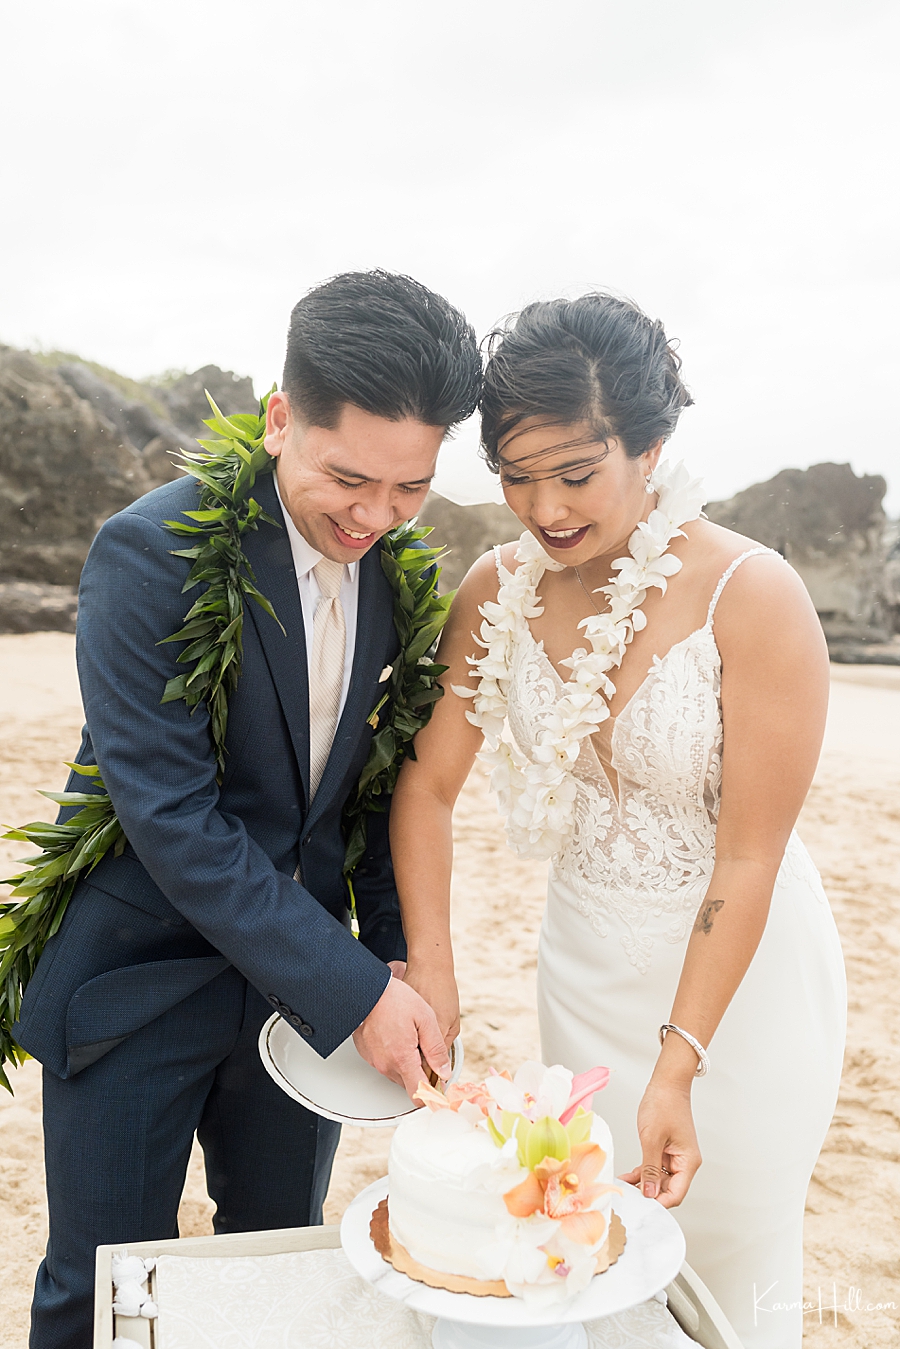 bride and groom cutting cake at beach wedding